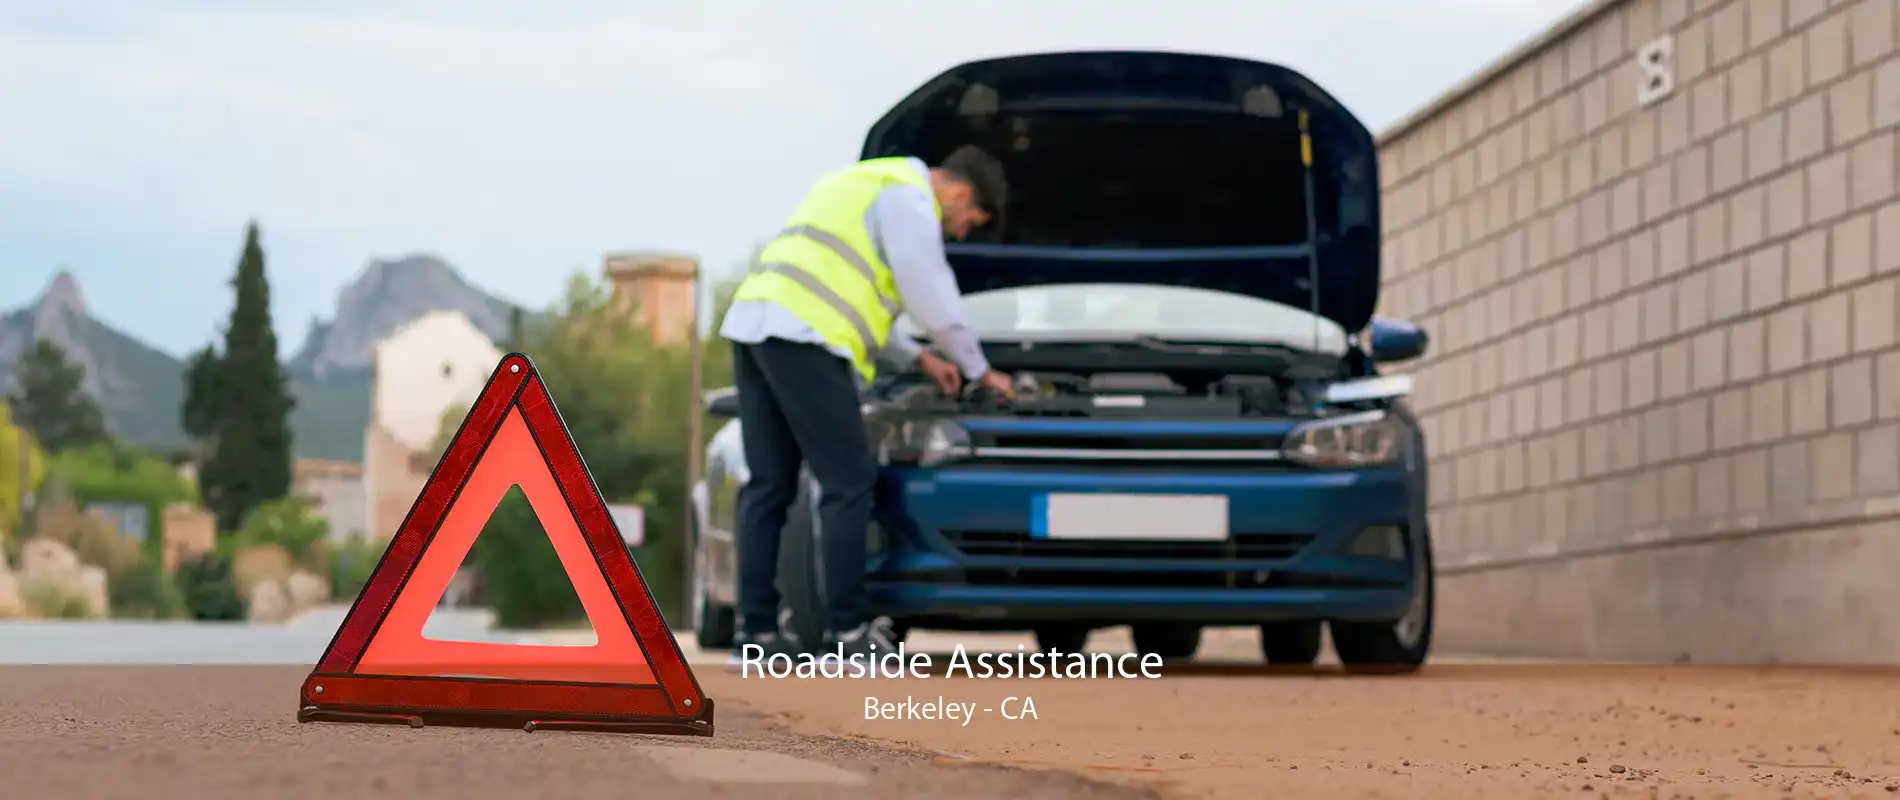 Roadside Assistance Berkeley - CA